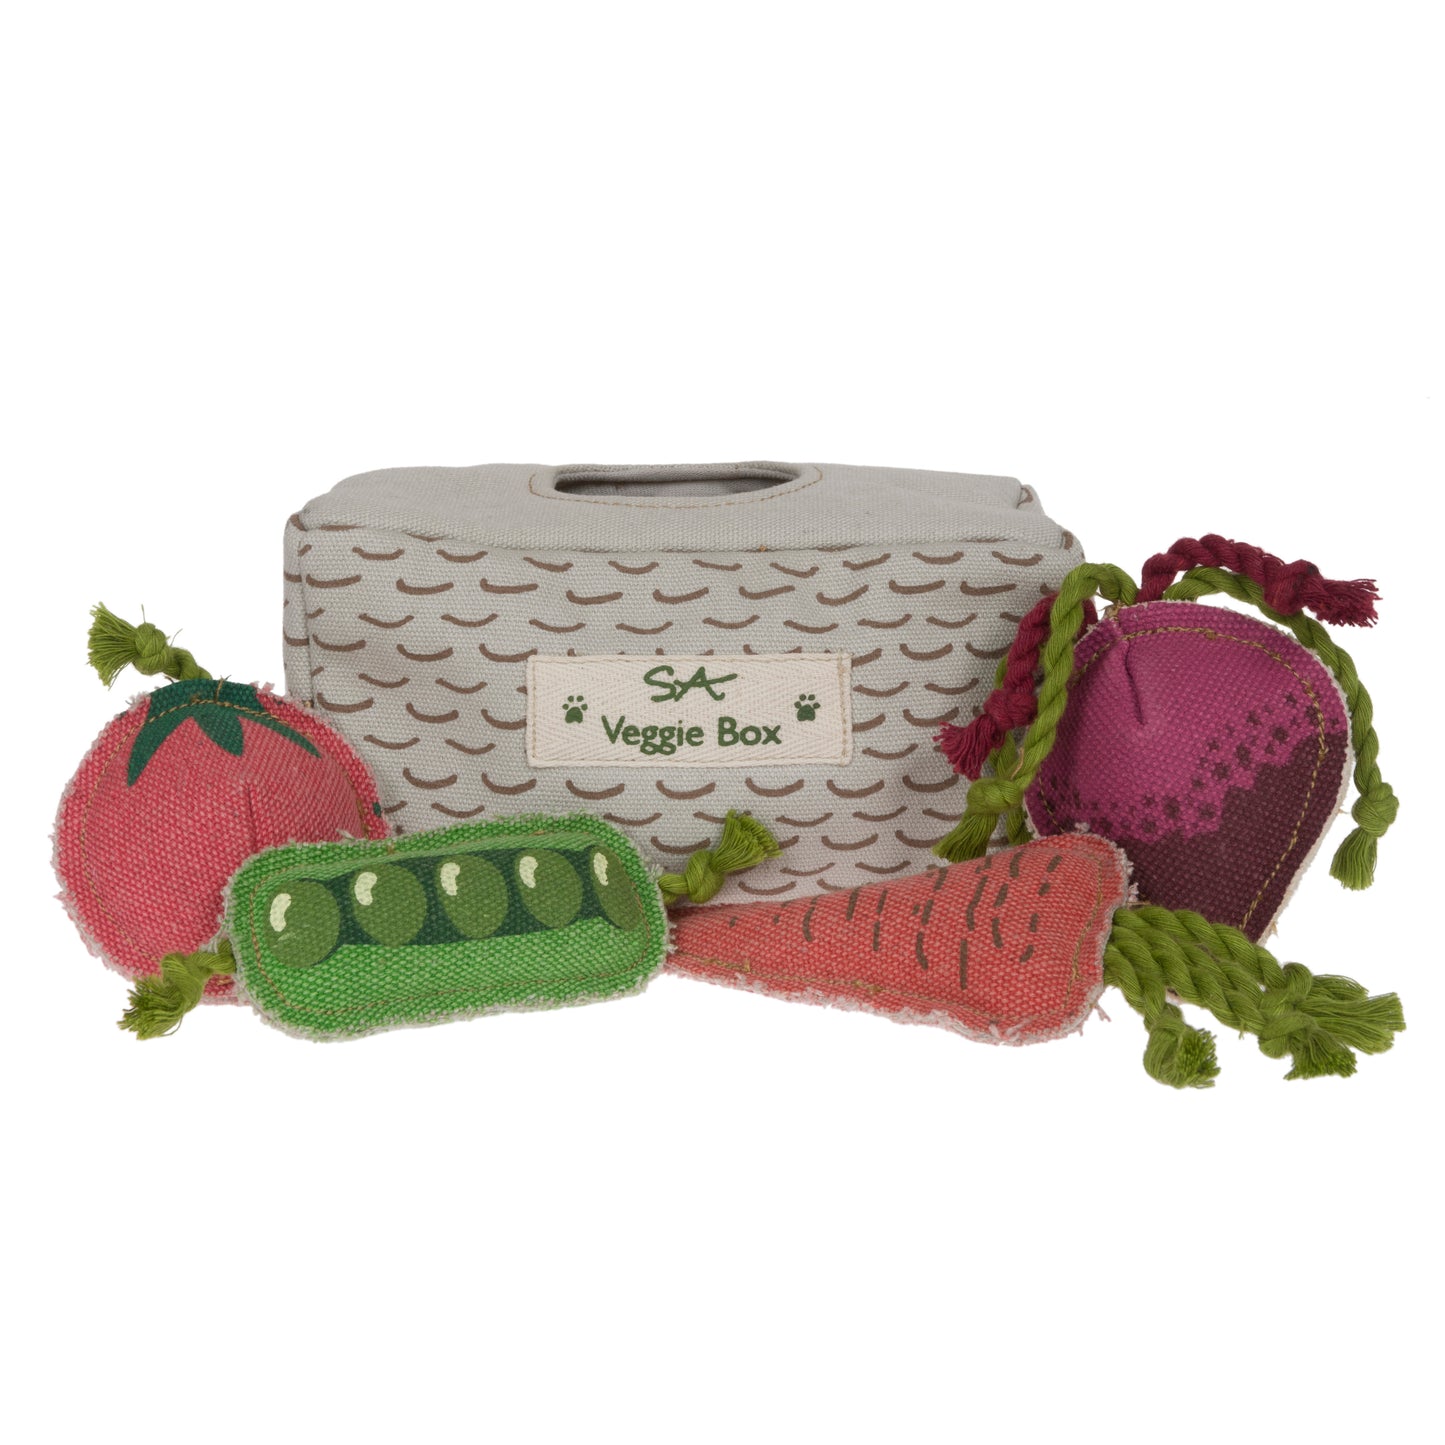 Sophie Allport Dog Toy, Veggie Box